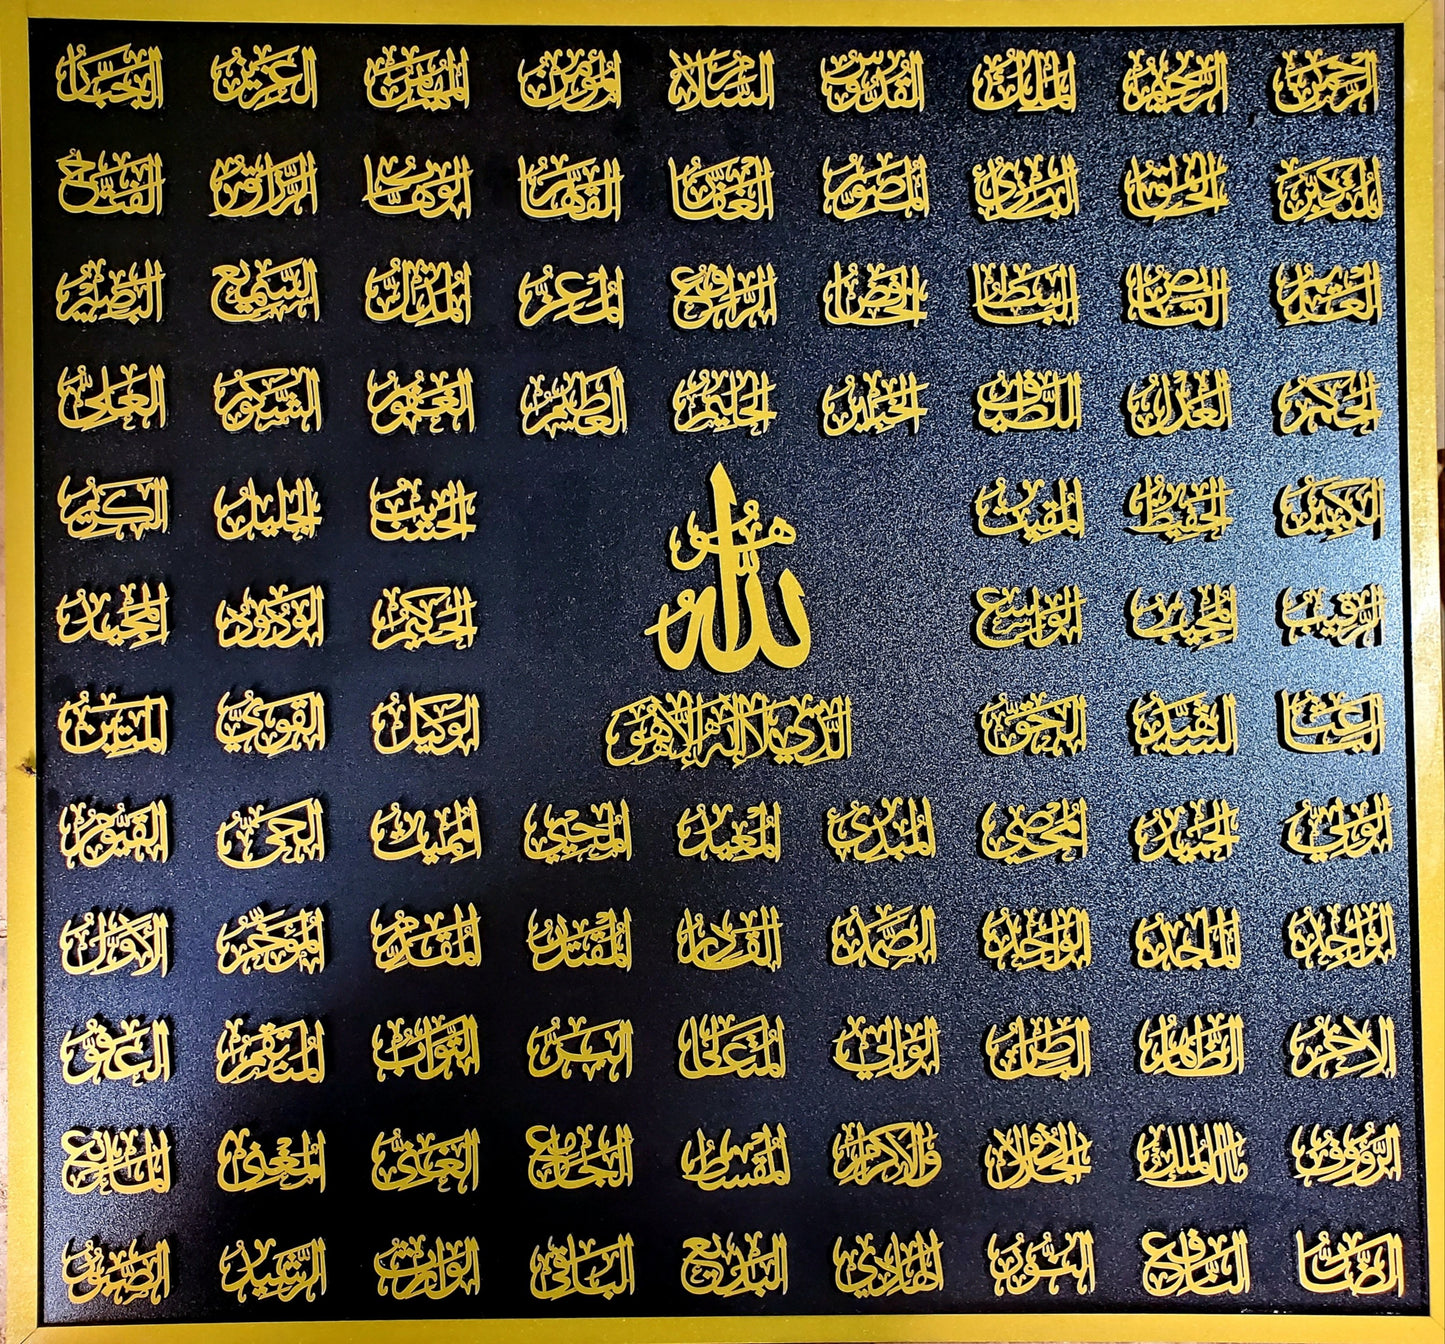 99 Names of Allah (Square)